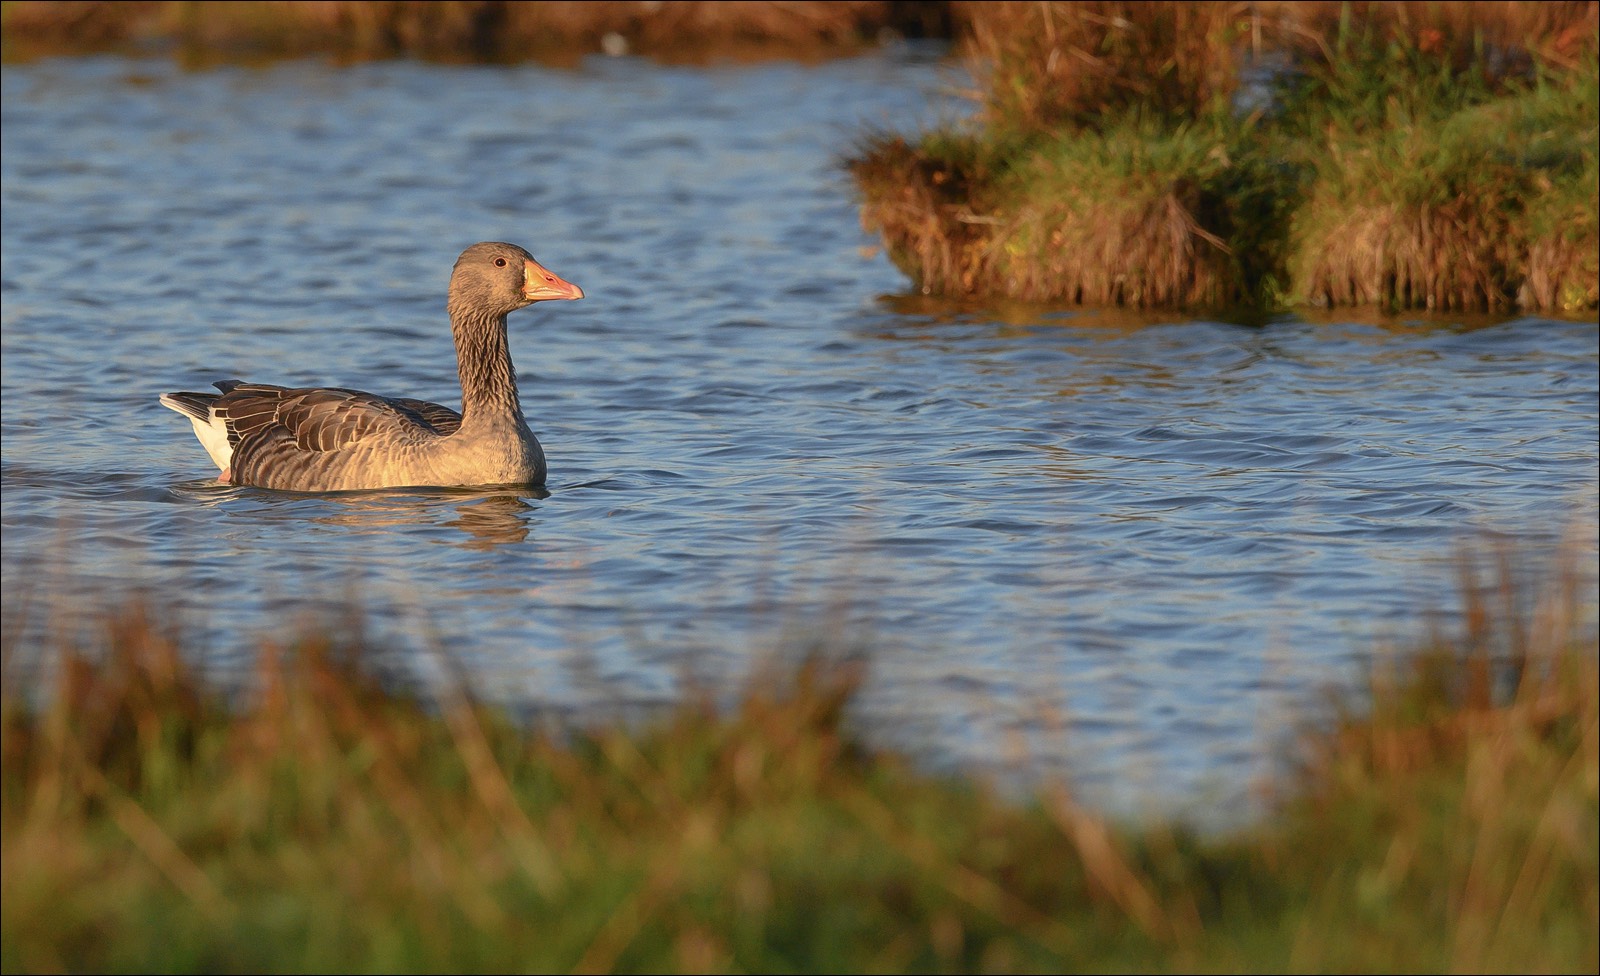 Greylag Goose (Grauwe Gans) - Uitkerke (Belgium) - 23/10/21